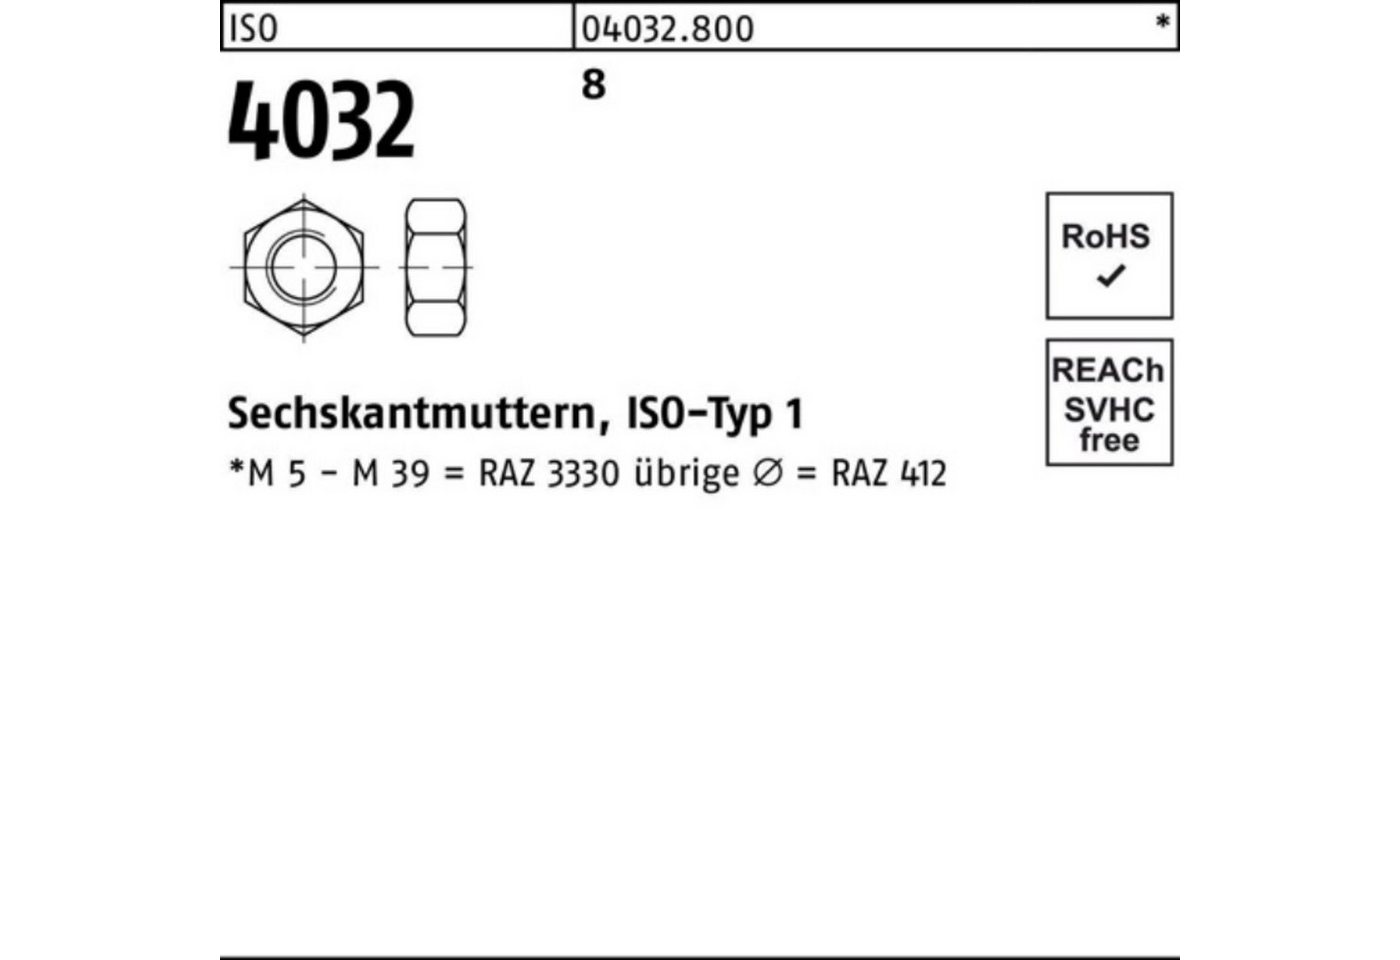 Bufab Muttern 100er Pack Sechskantmutter ISO 4032 M20 8 100 Stück ISO 4032 8 Sechsk von Bufab